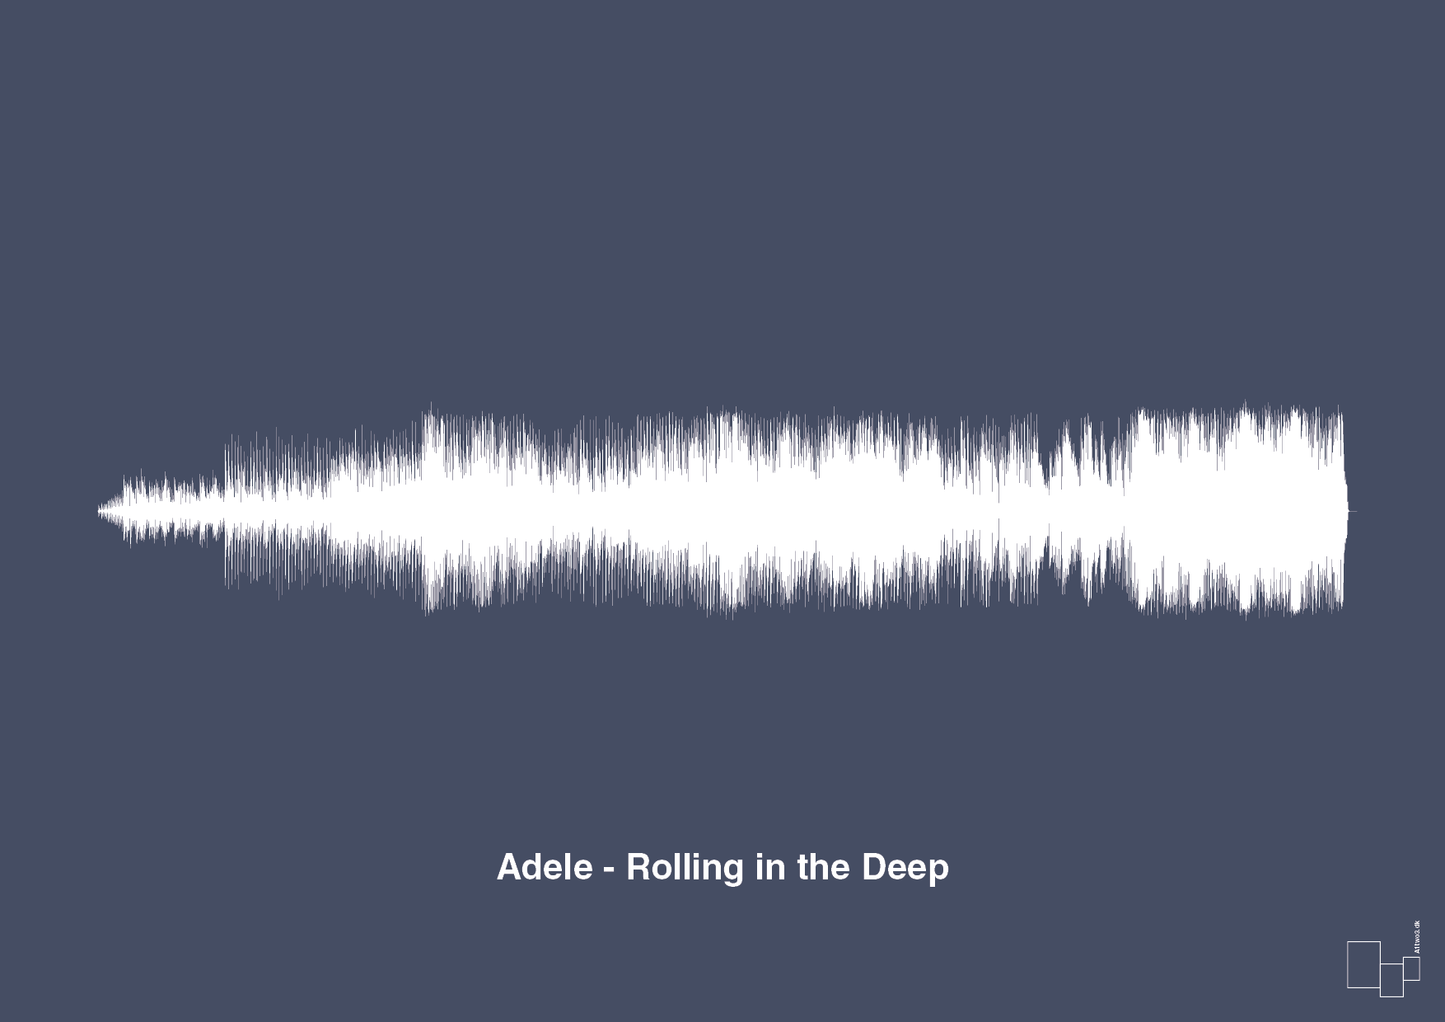 adele - rolling in the deep - Plakat med Musik i Petrol